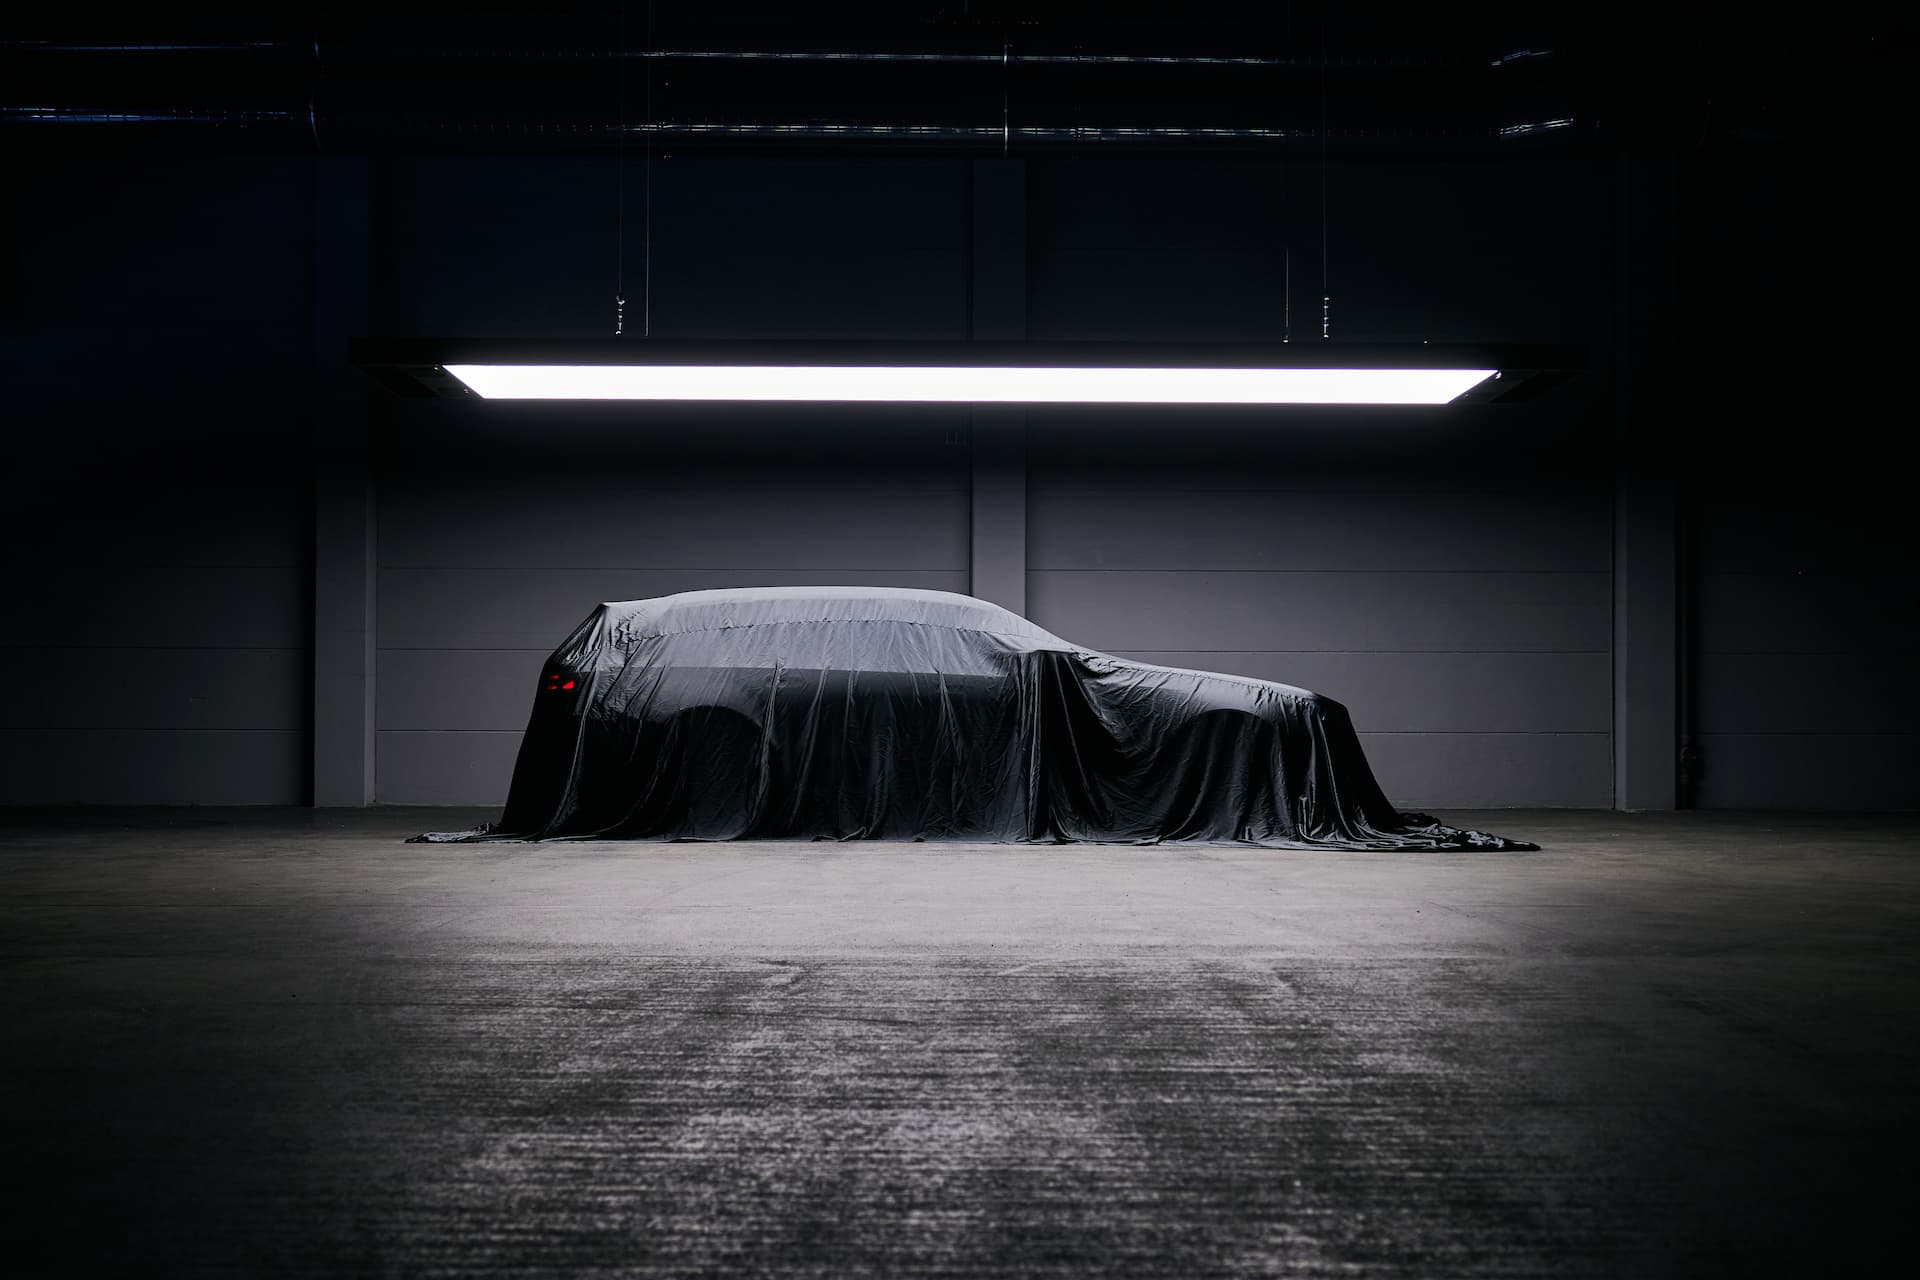 BMW M GmbH confirms development of a new BMW M5 Touring